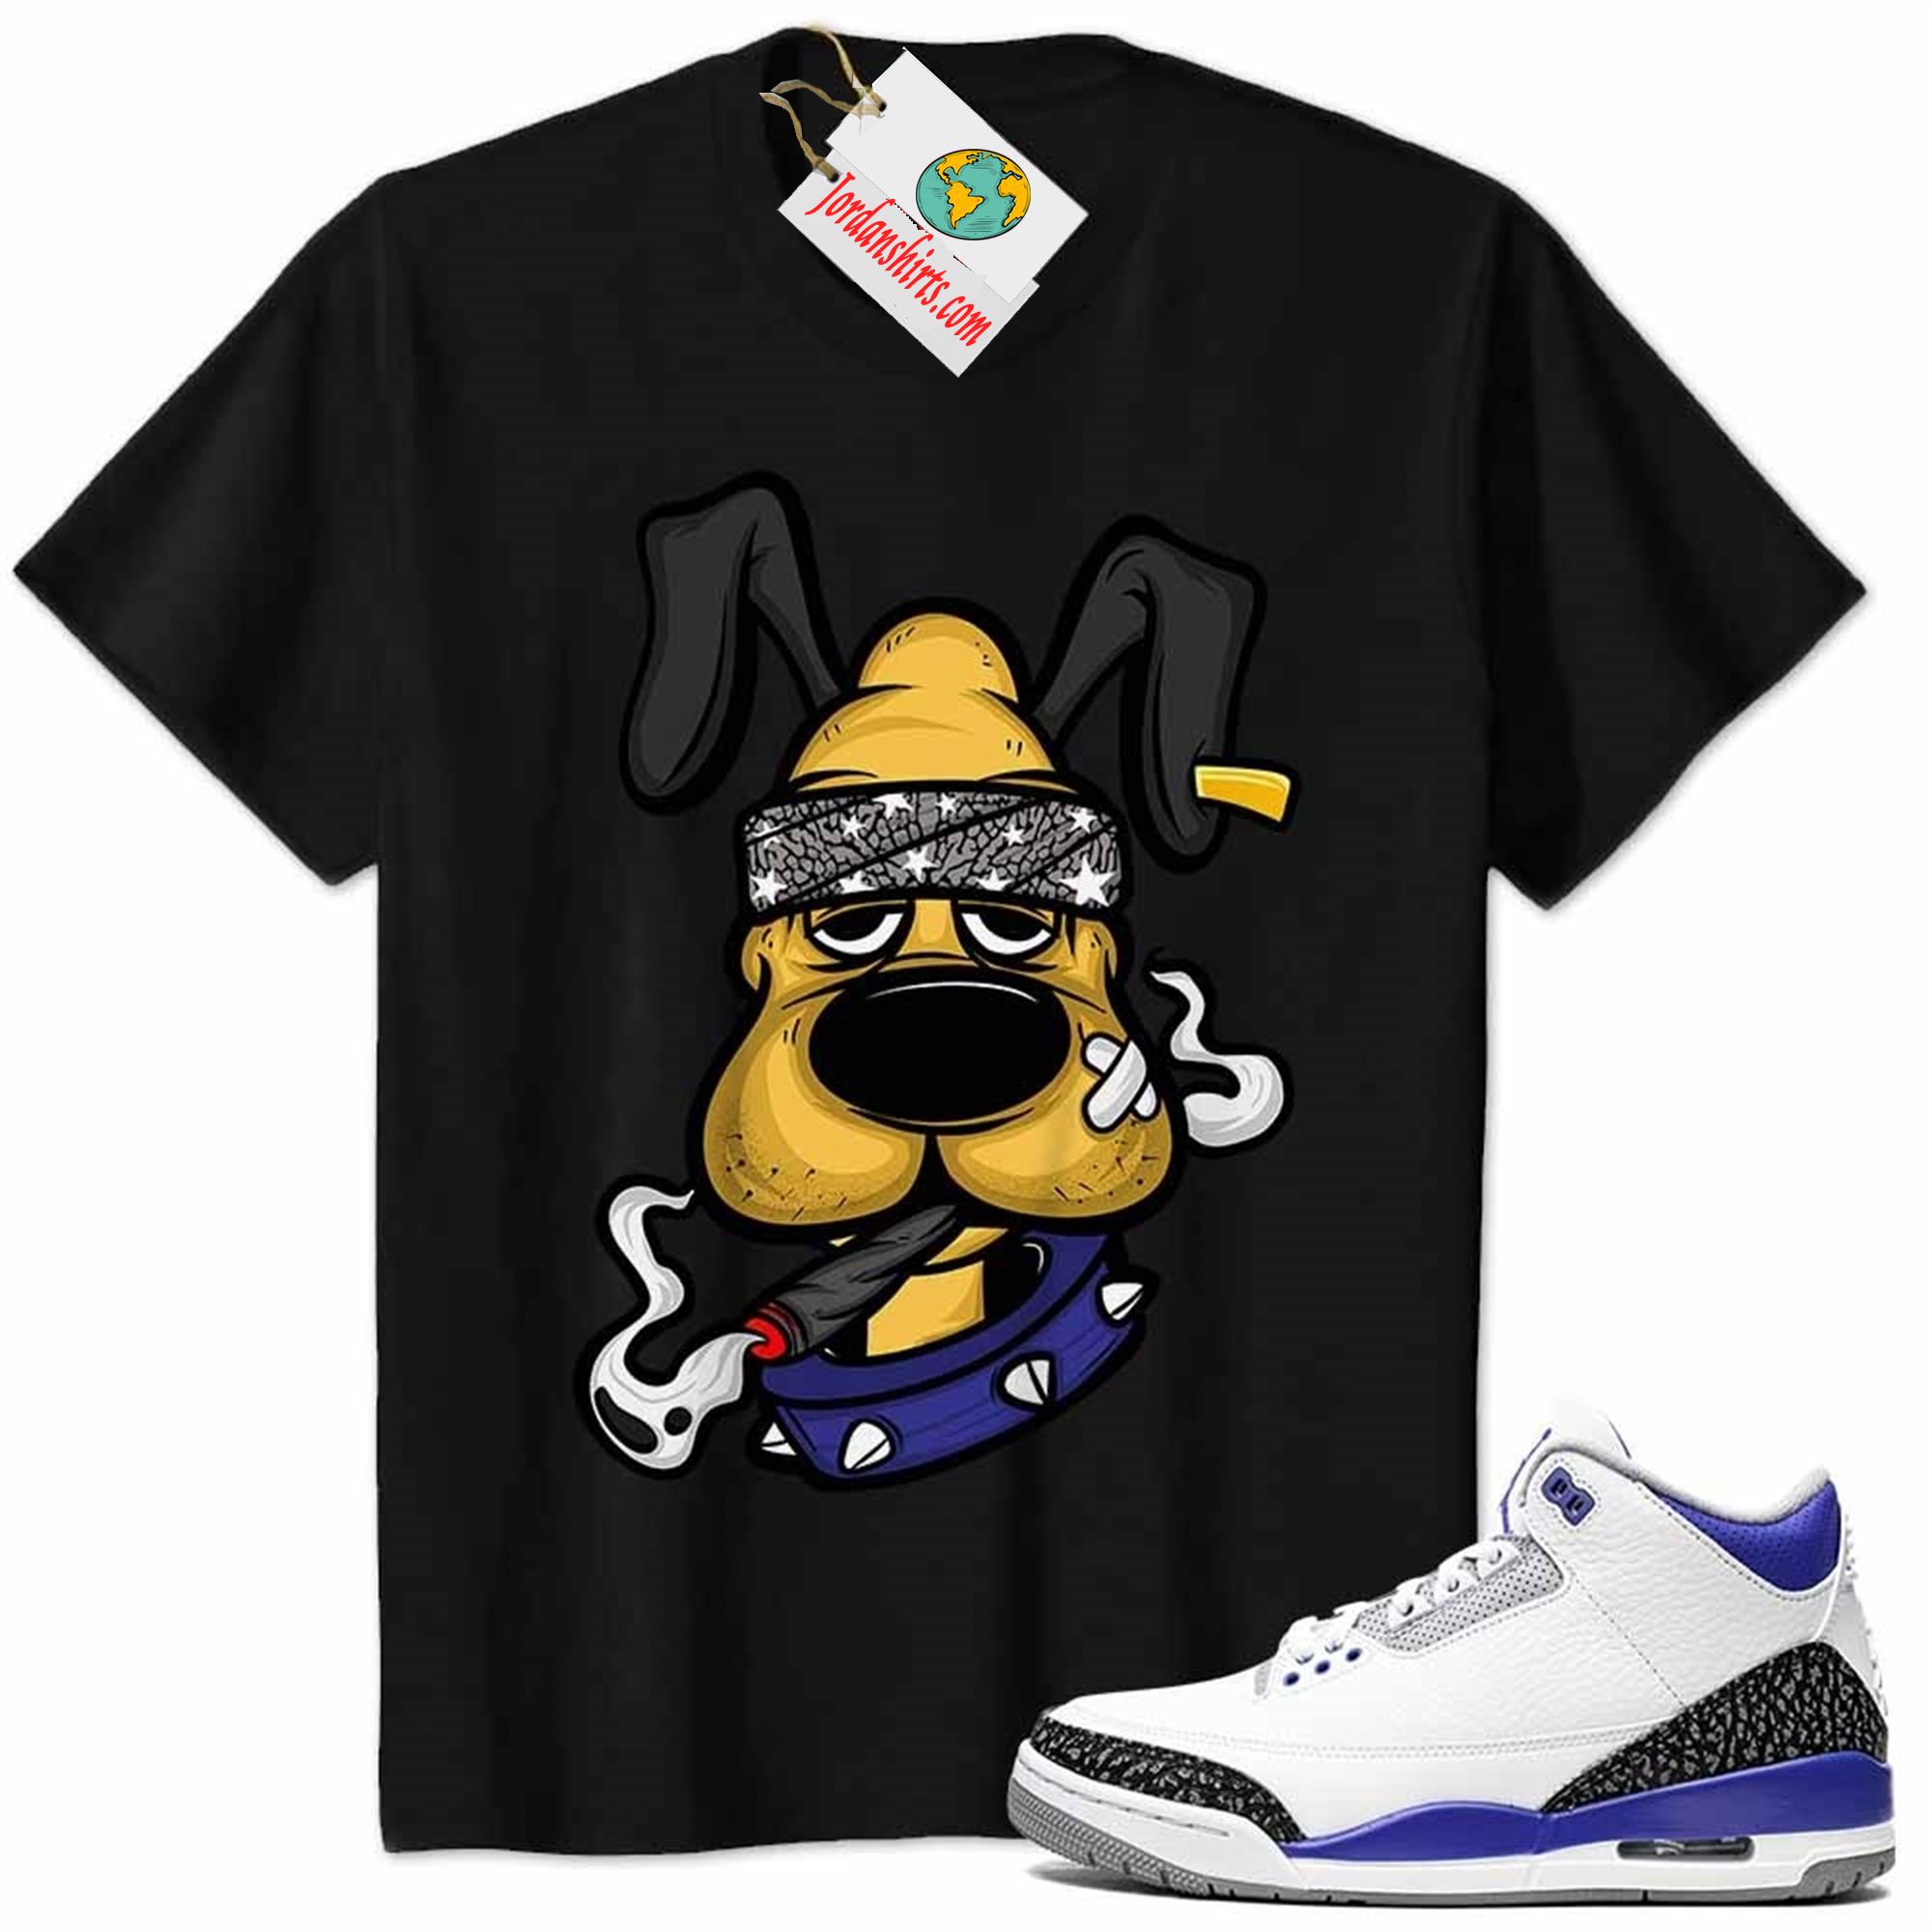 Jordan 3 Shirt, Gangster Pluto Smoke Weed Black Air Jordan 3 Racer Blue 3s Size Up To 5xl